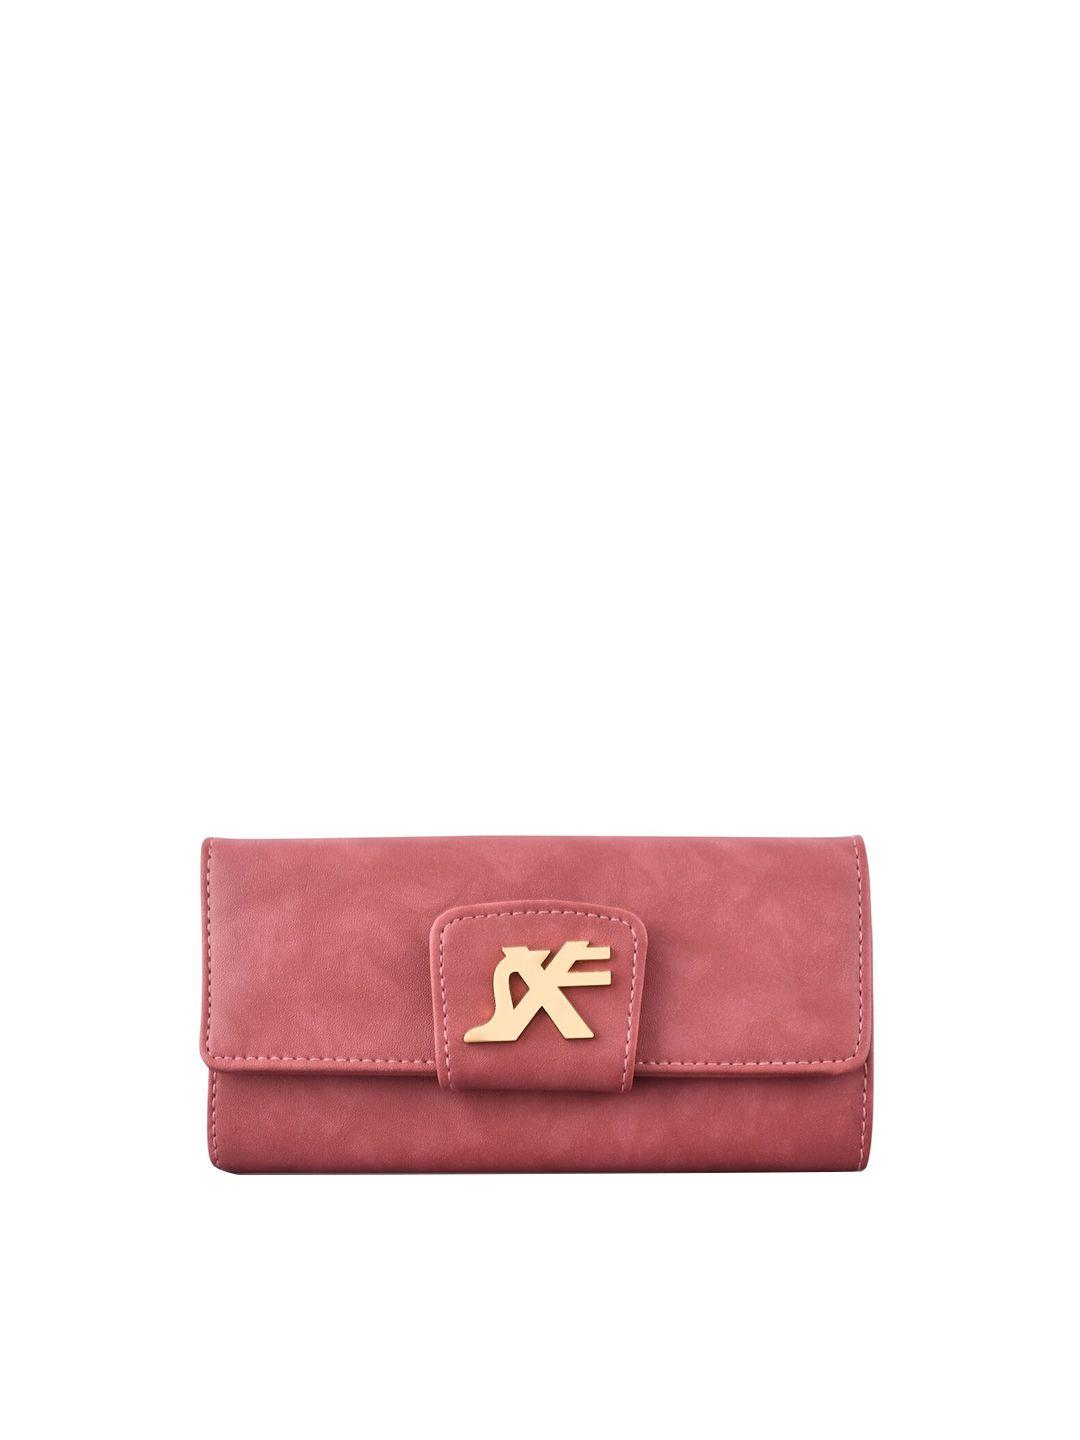 sxf speed x fashion pink & gold-toned purse clutch